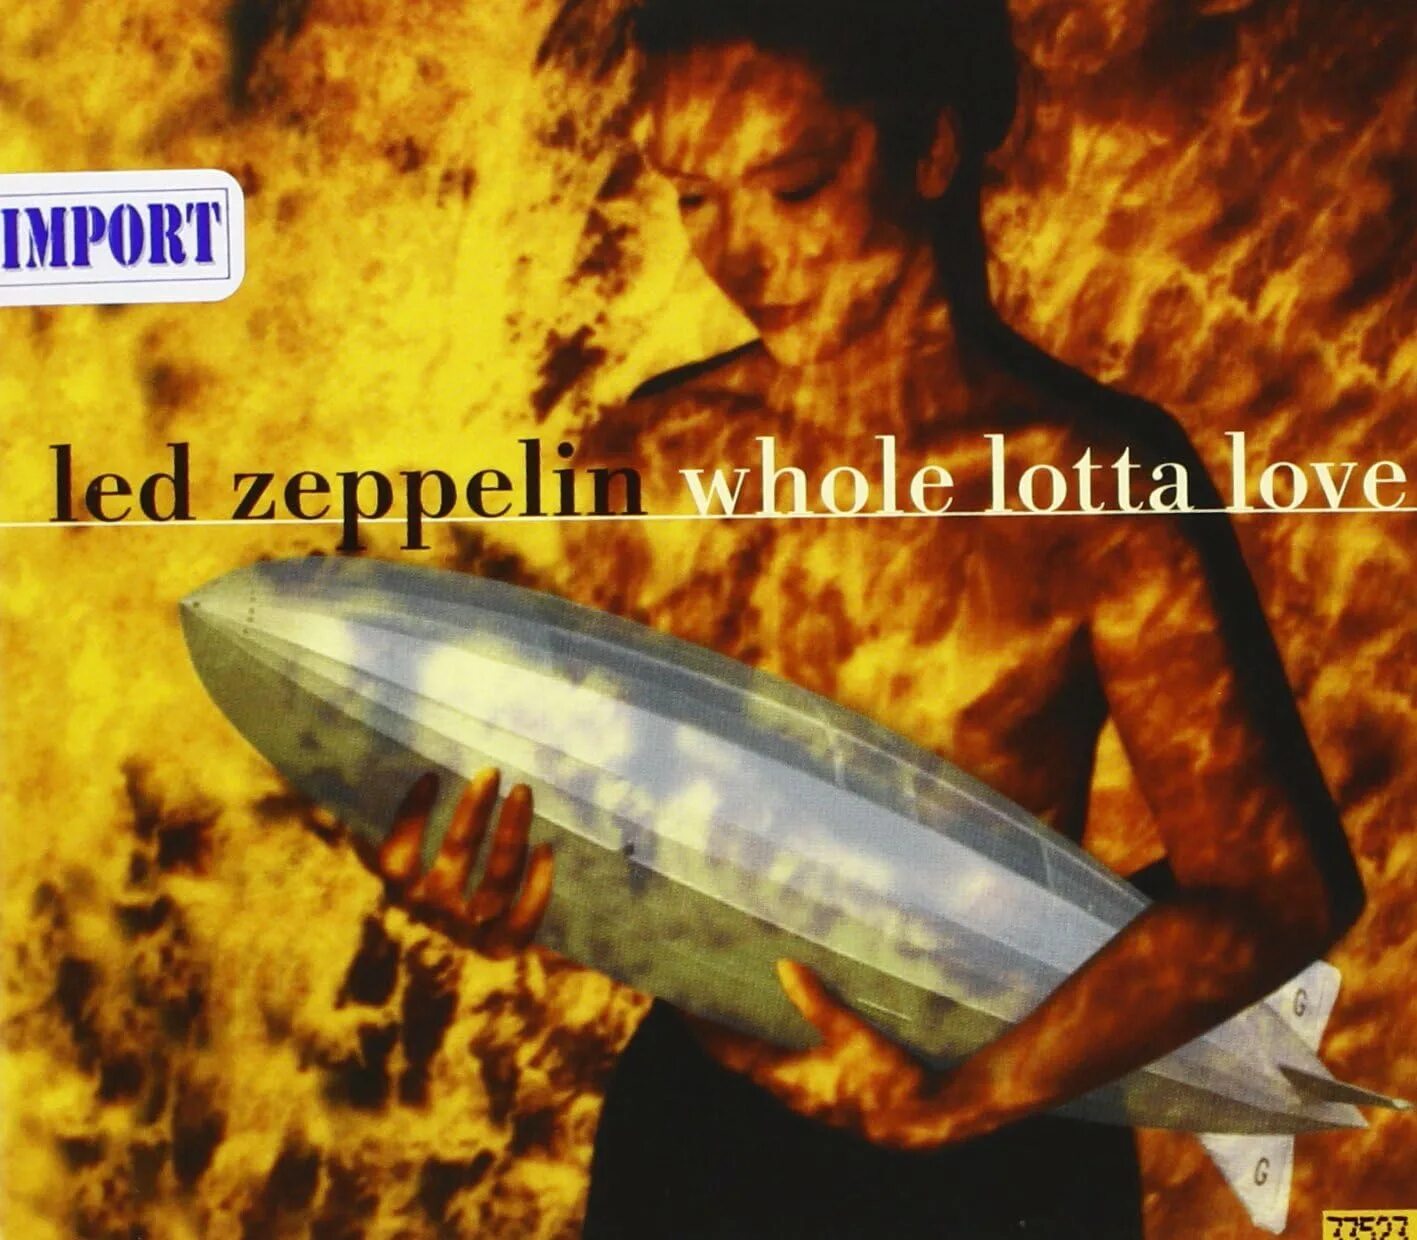 Лед Зеппелин whole Lotta Love. Лёд Зеппелин Лотта лов. Led Zeppelin whole Lotta Love фото. Led Zeppelin «whole Lotta Love» 1969. Led zeppelin whole lotta